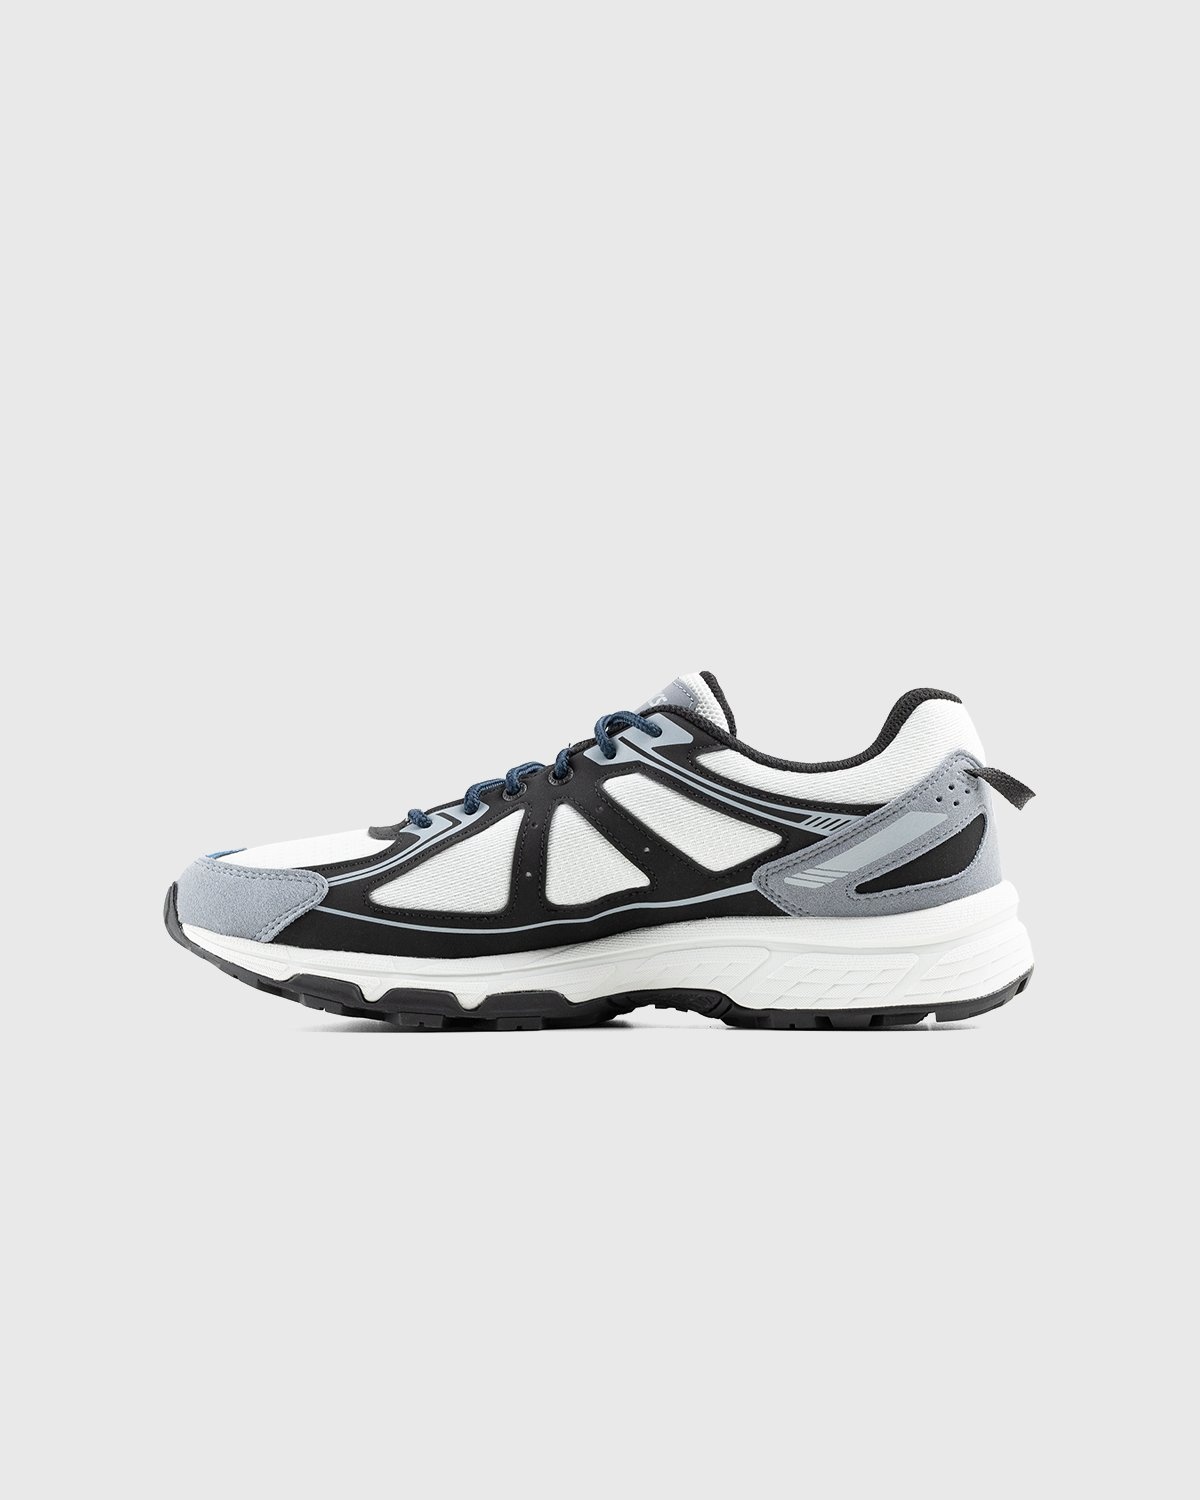 asics – Gel-Venture 6 Glacier Grey Black - Low Top Sneakers - Grey - Image 2